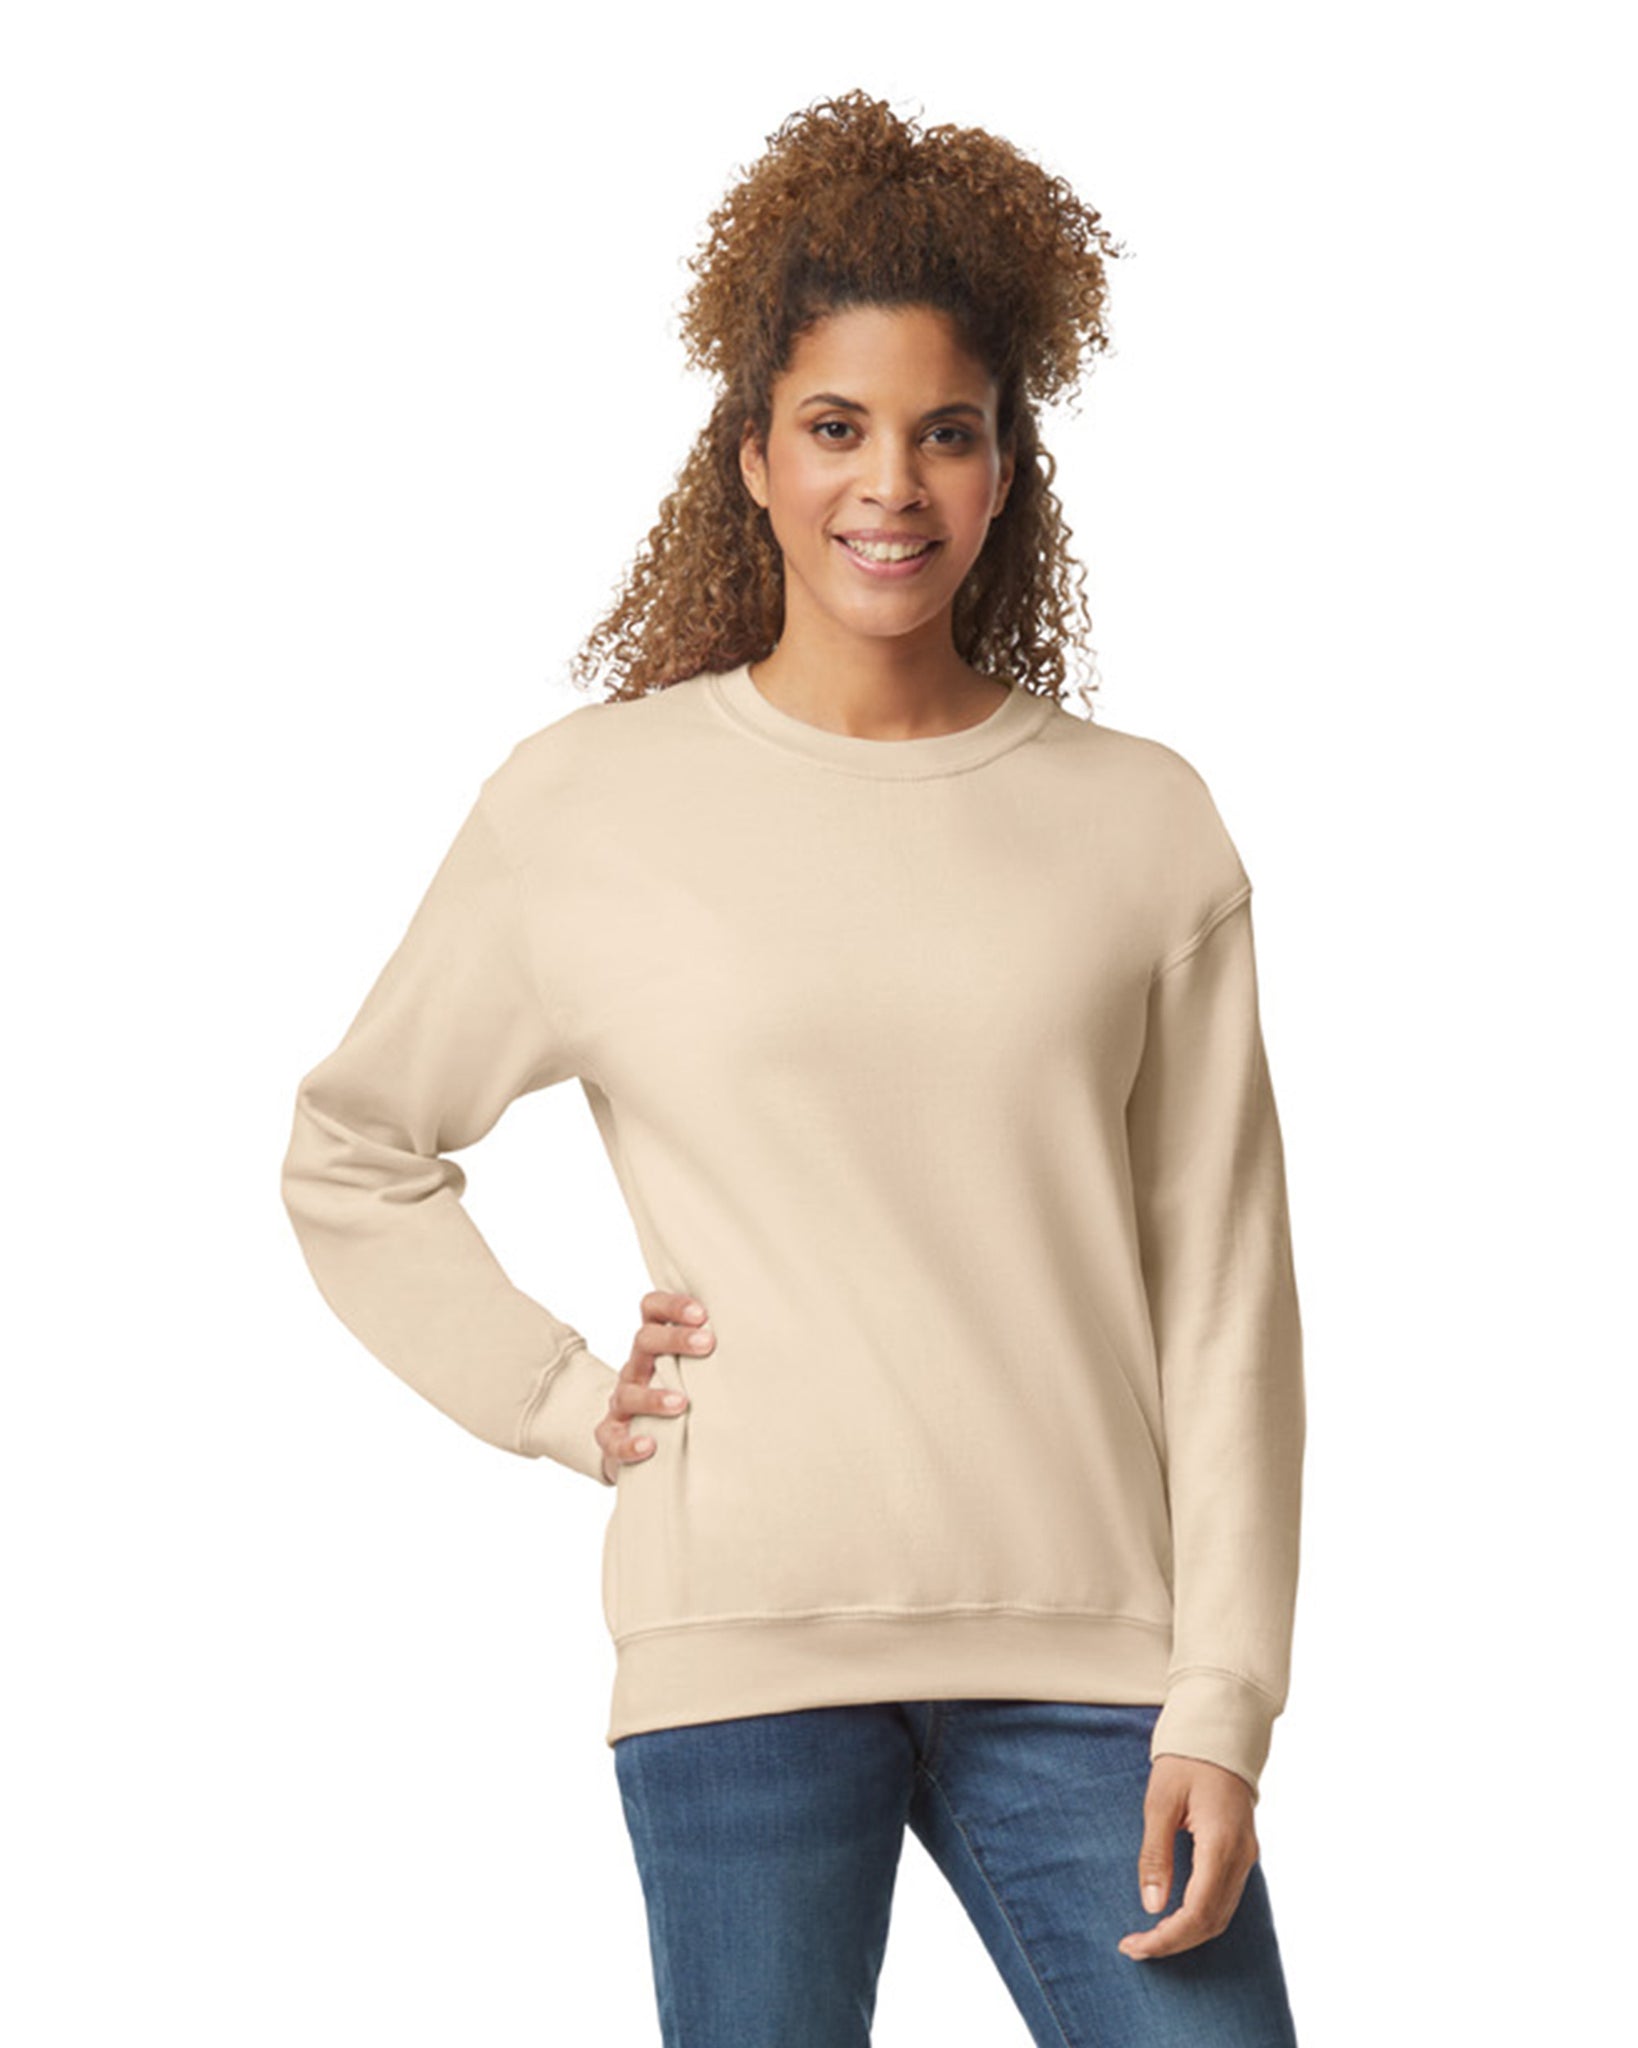 Gildan Sweatshirt Sand Customized Adult Sizes